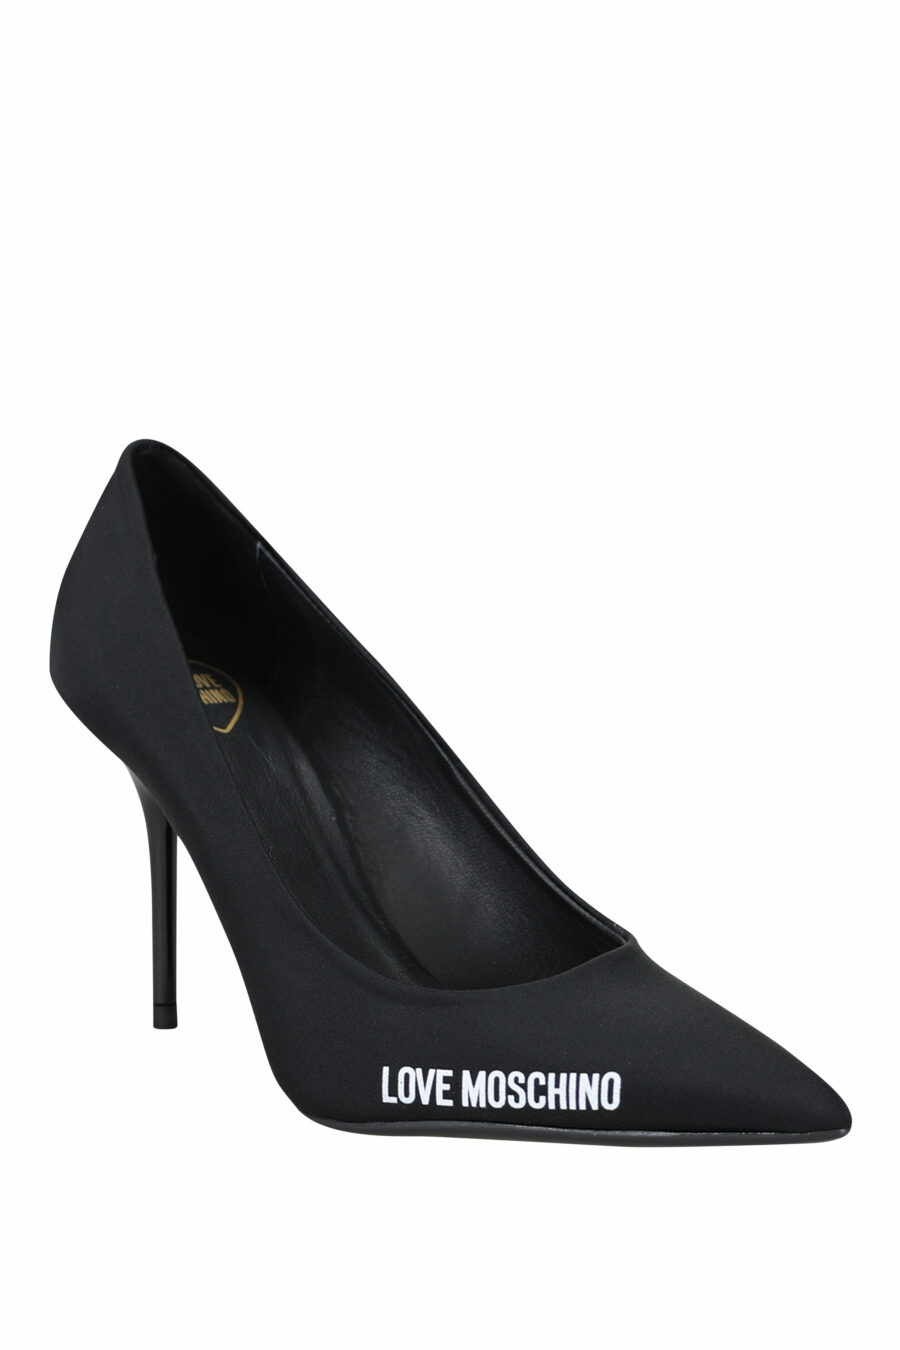 Black heels with mini-logo - 8054653052130 1